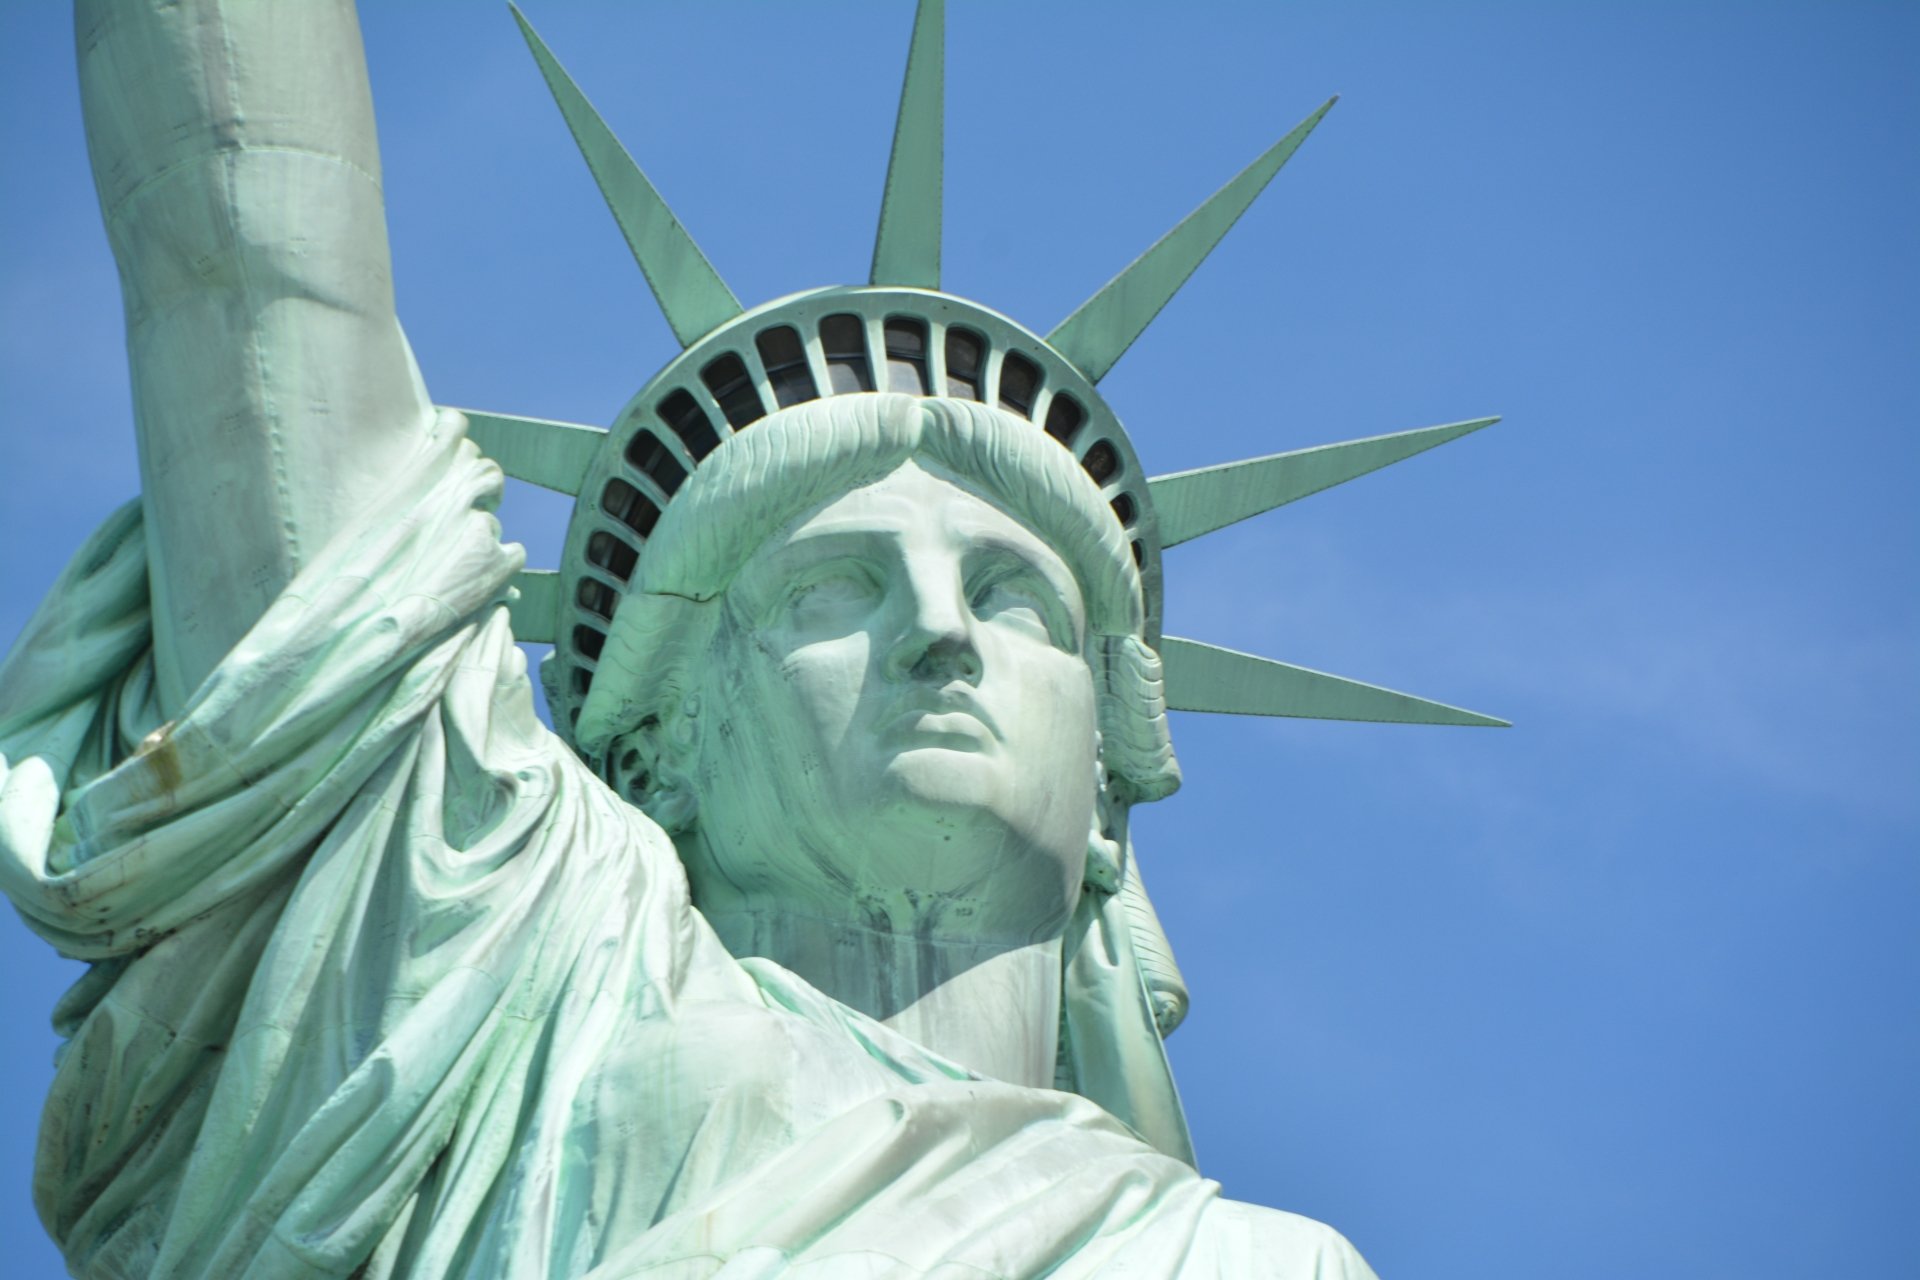 Statue Of Liberty, Liberty Island in New York Harbor, USA